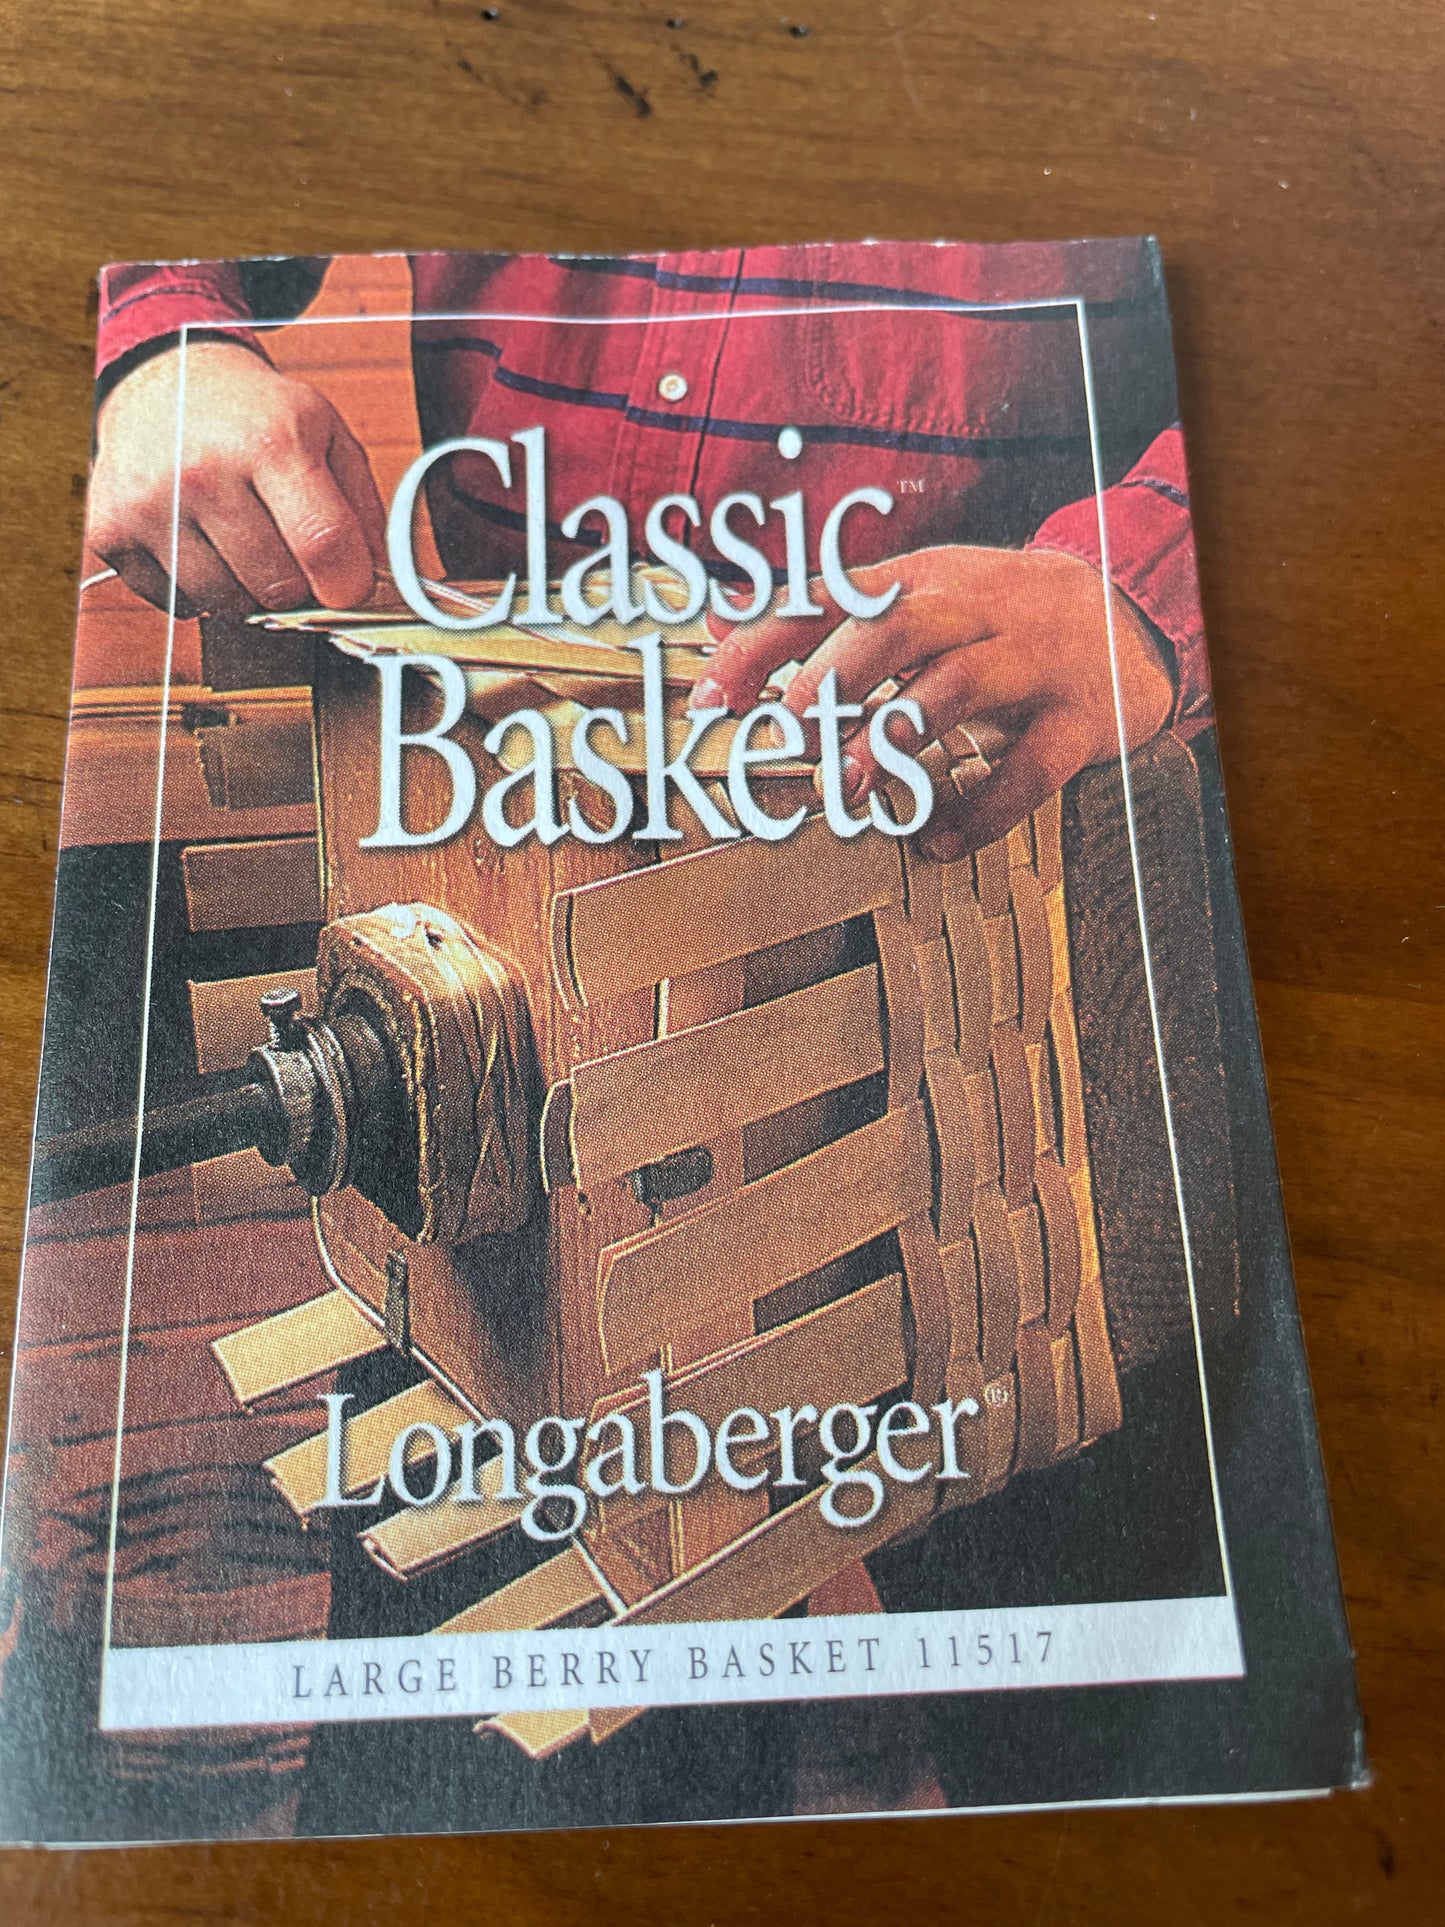 Longaberger "Large Berry" Lined Basket